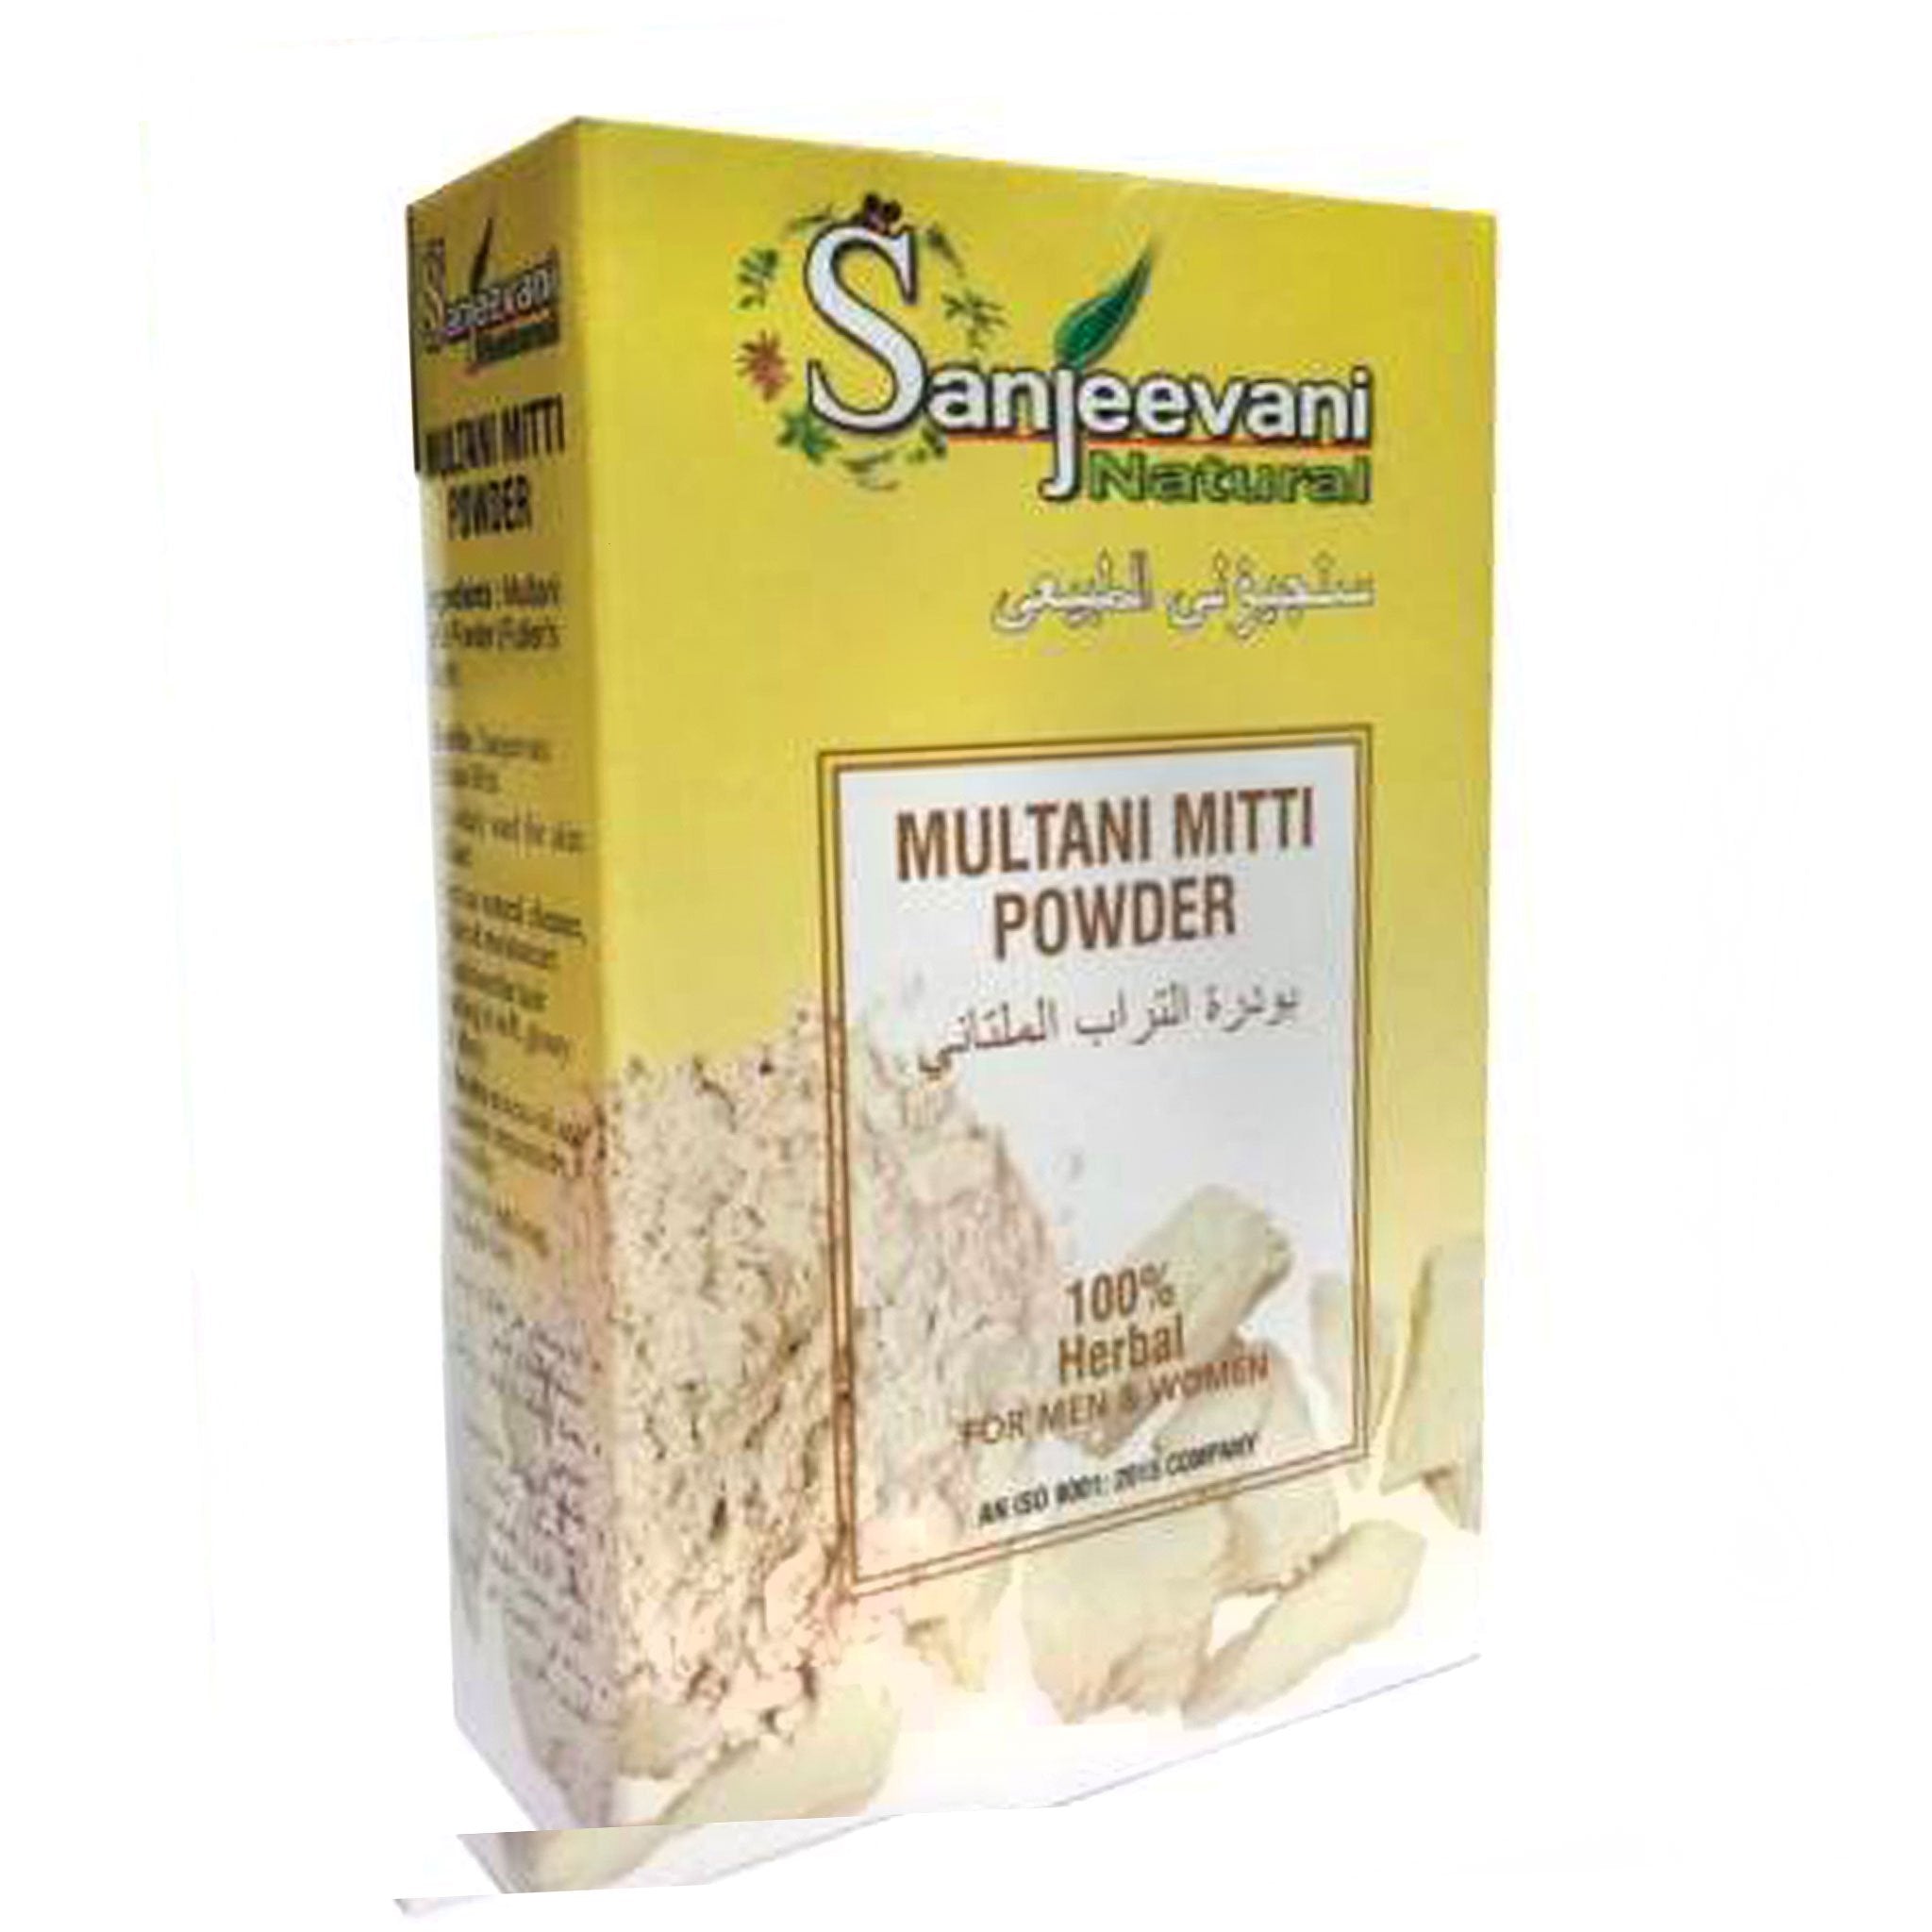 Sanjeevani Natural Multani Mitti Powder 100 Herbal For Women  Men 100g  For Damage Hair and Hair Treatment